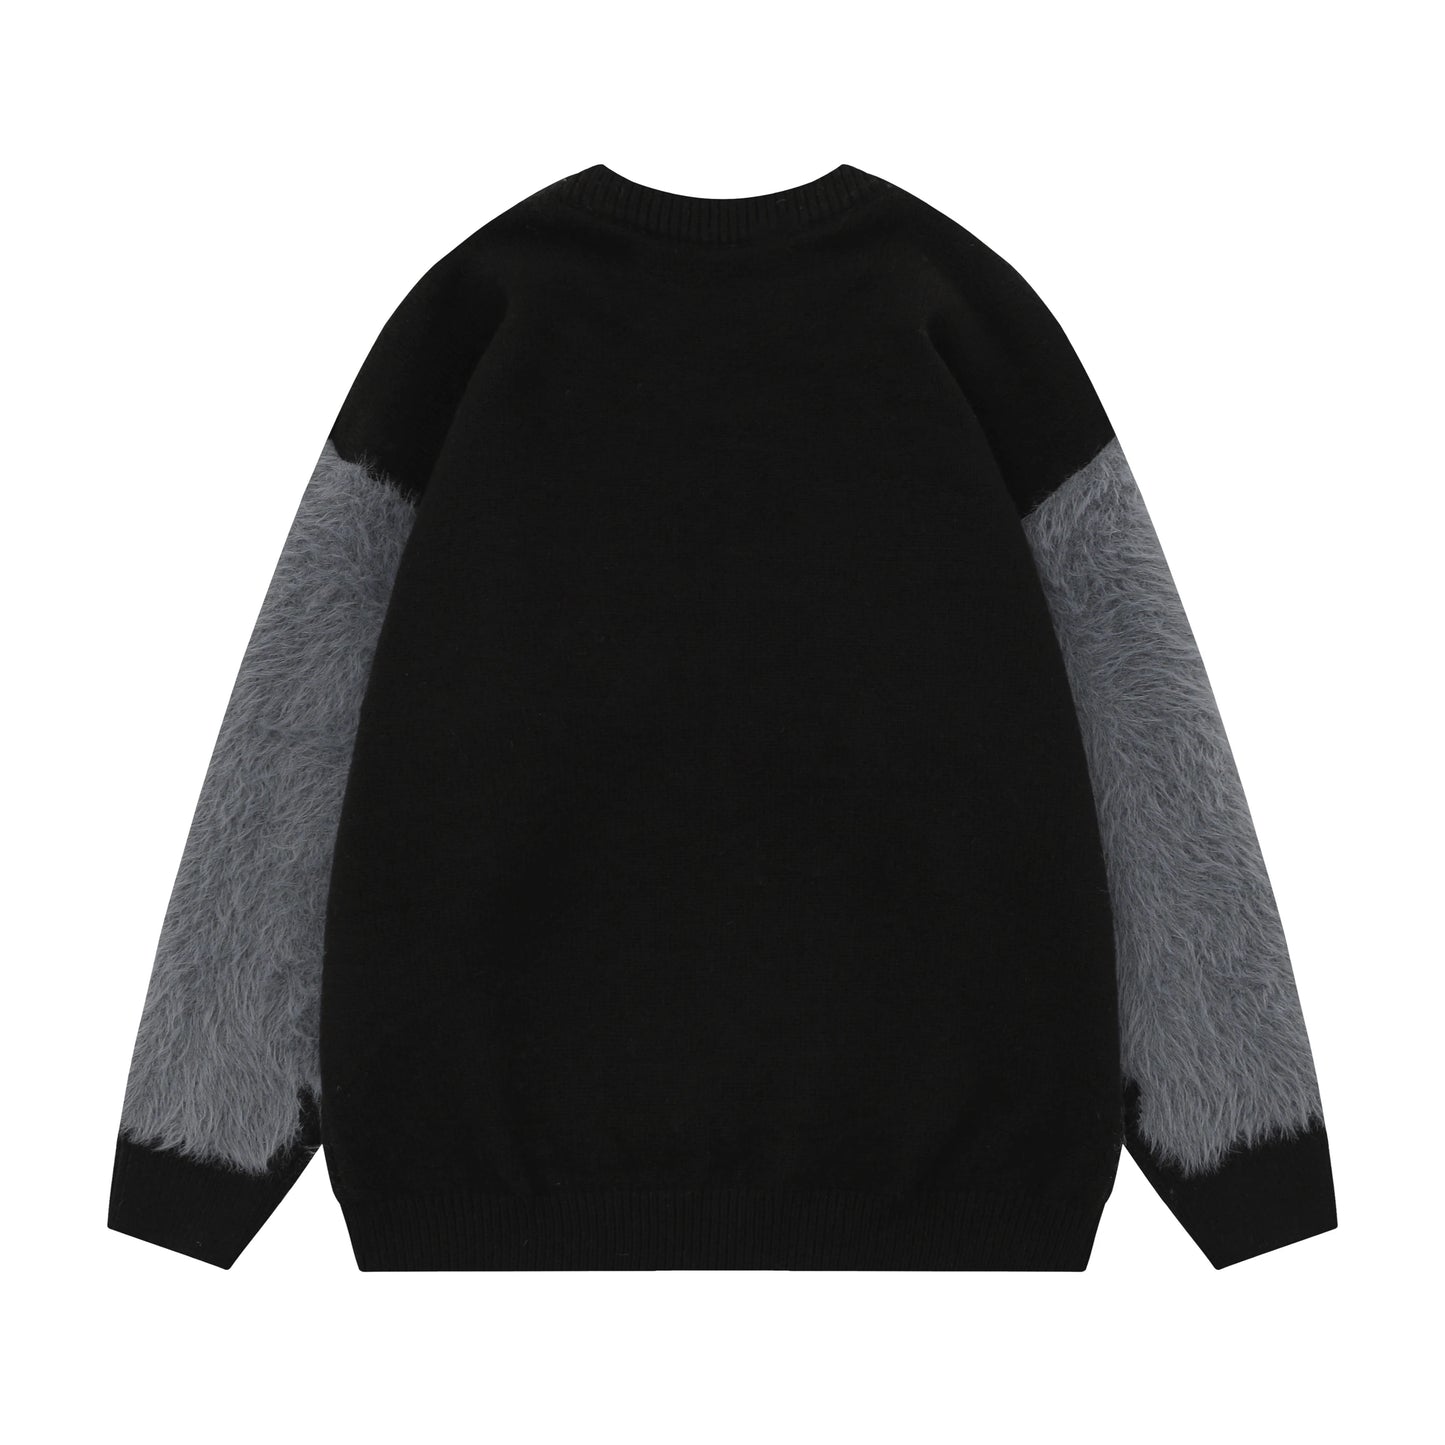 Grey Sweater Knit